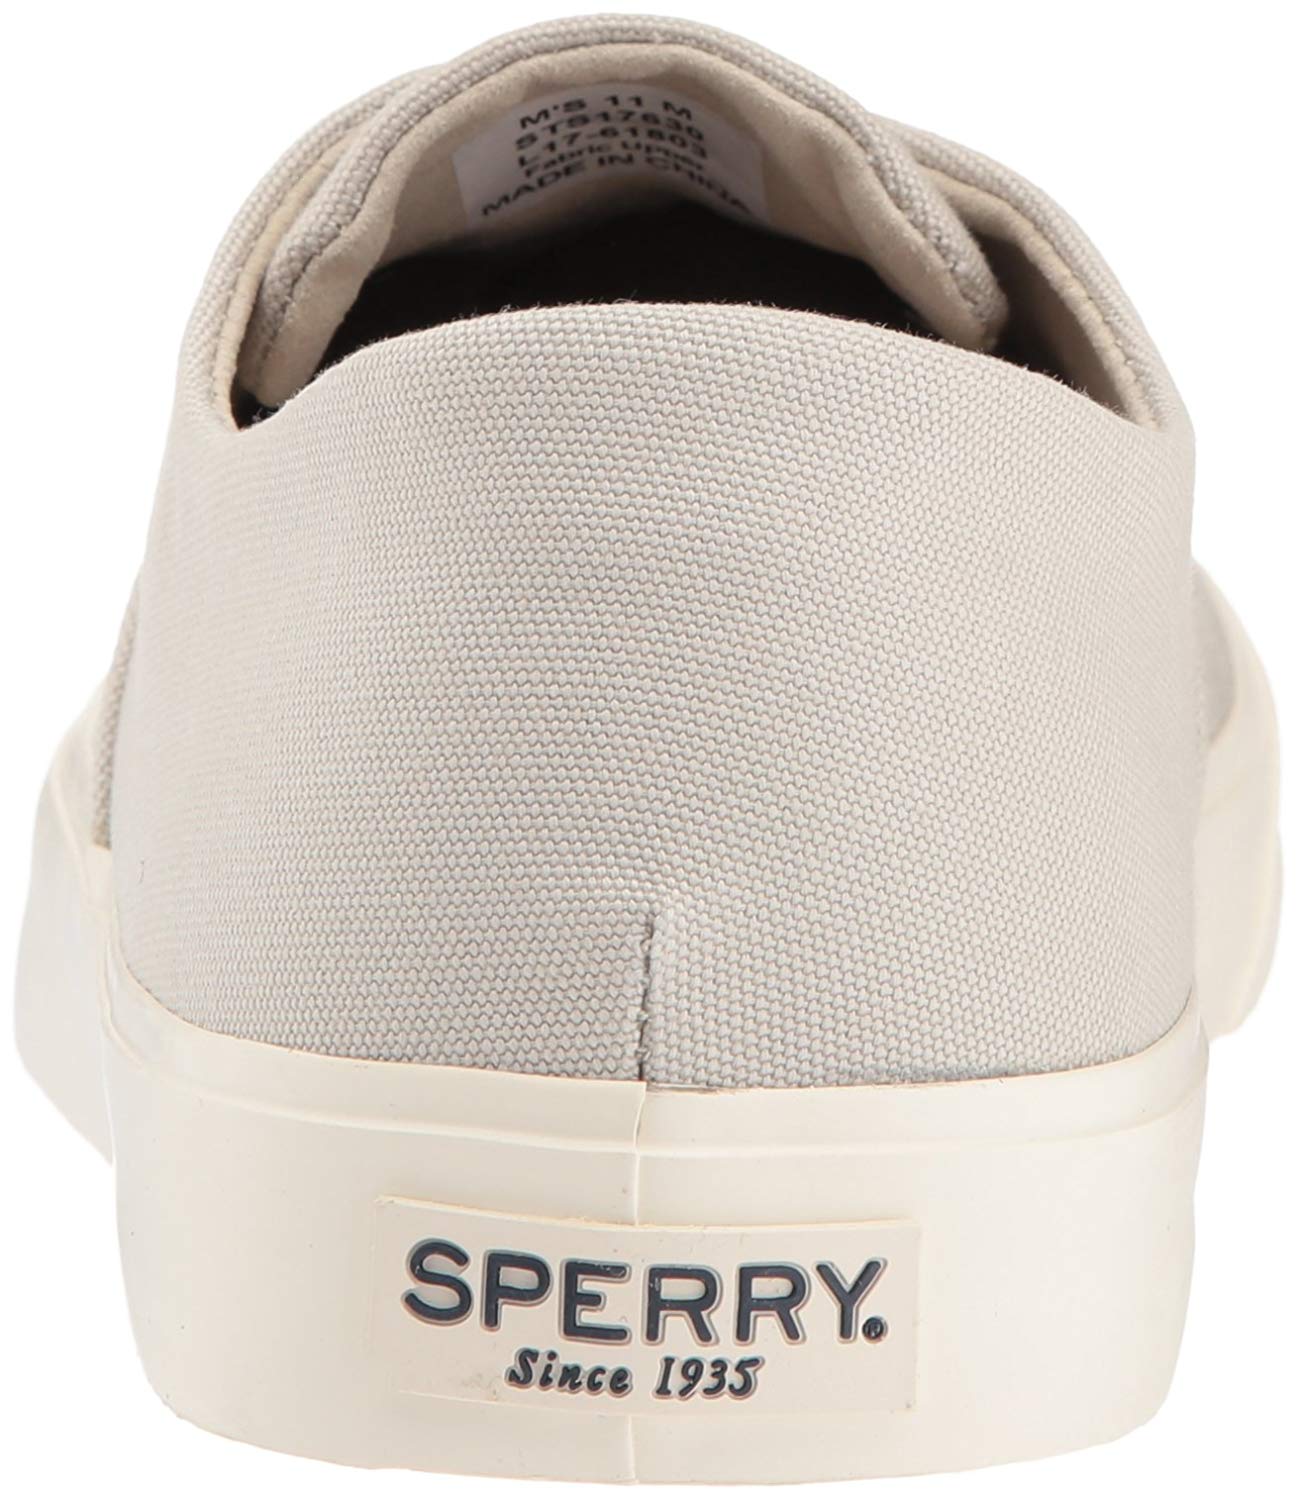 Sperry Men's Captains CVO Sneaker, Light Grey, Size 8.0 pghP | eBay